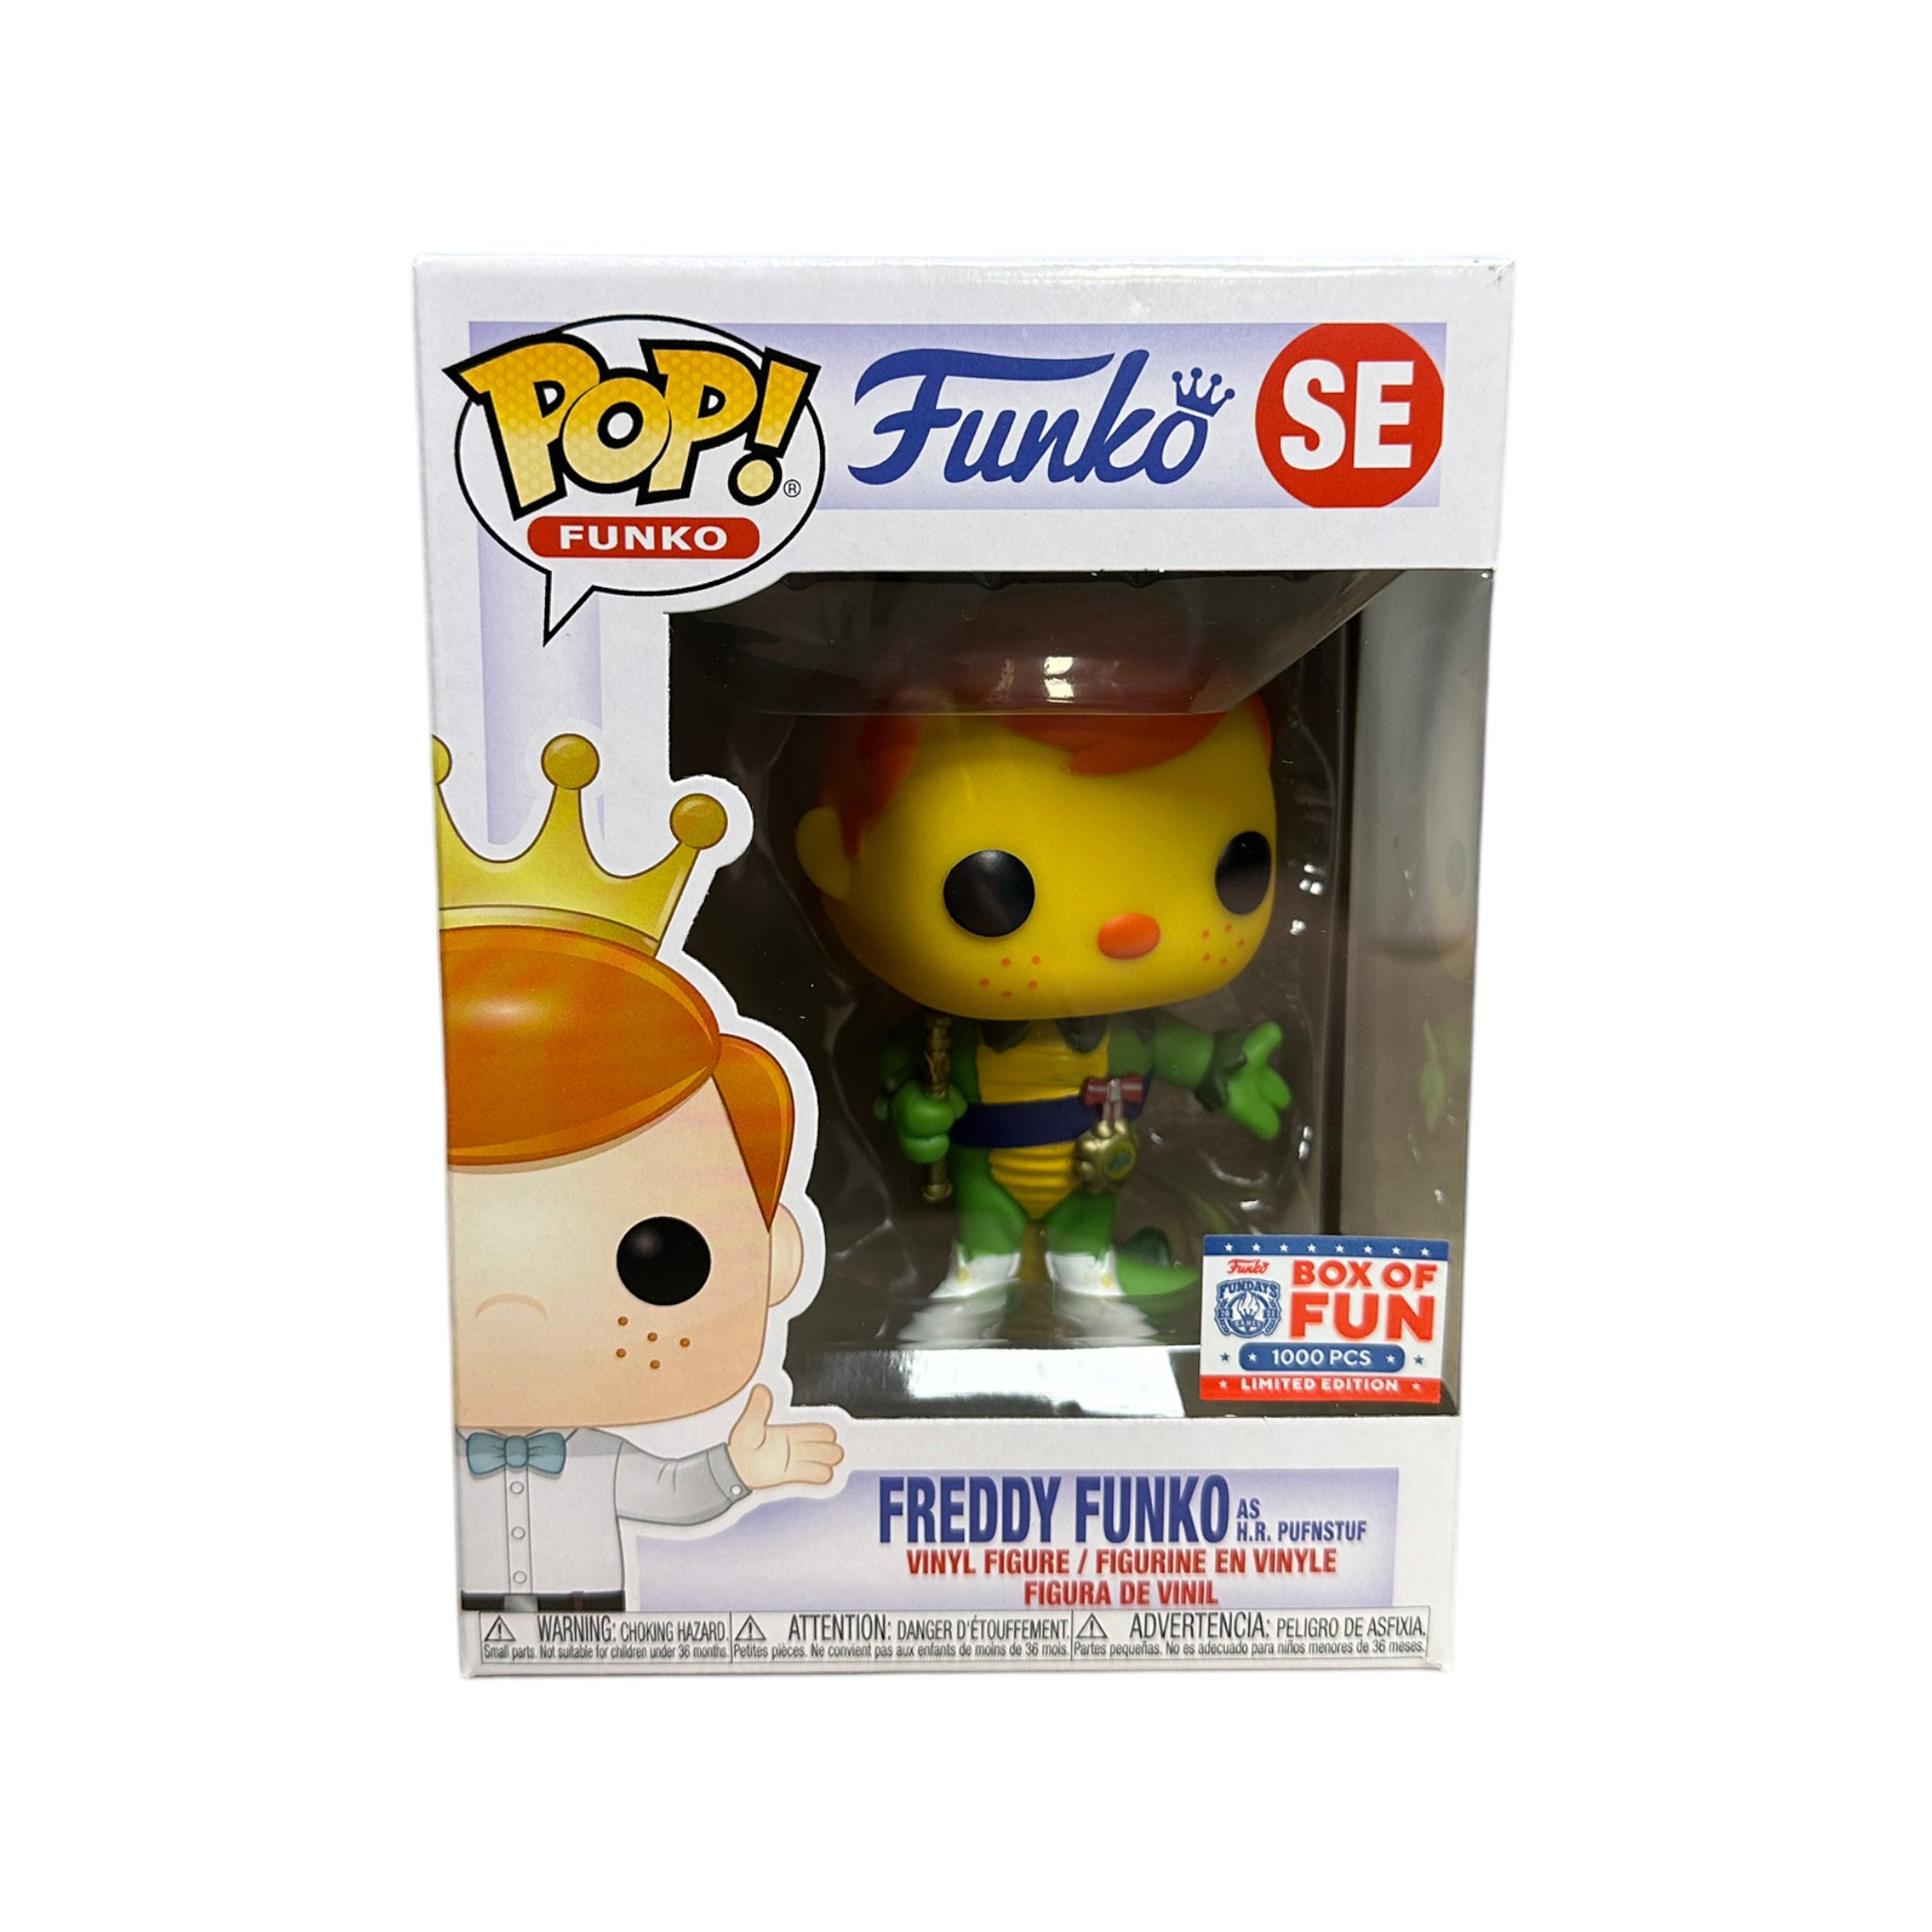 Freddy Funko as H.R. Pufnstuf Funko Pop! - Sid & Marty Krofft Pictures - Virtual Funkon 2021 Box of Fun Exclusive LE1000 Pcs - Condition 8.5/10